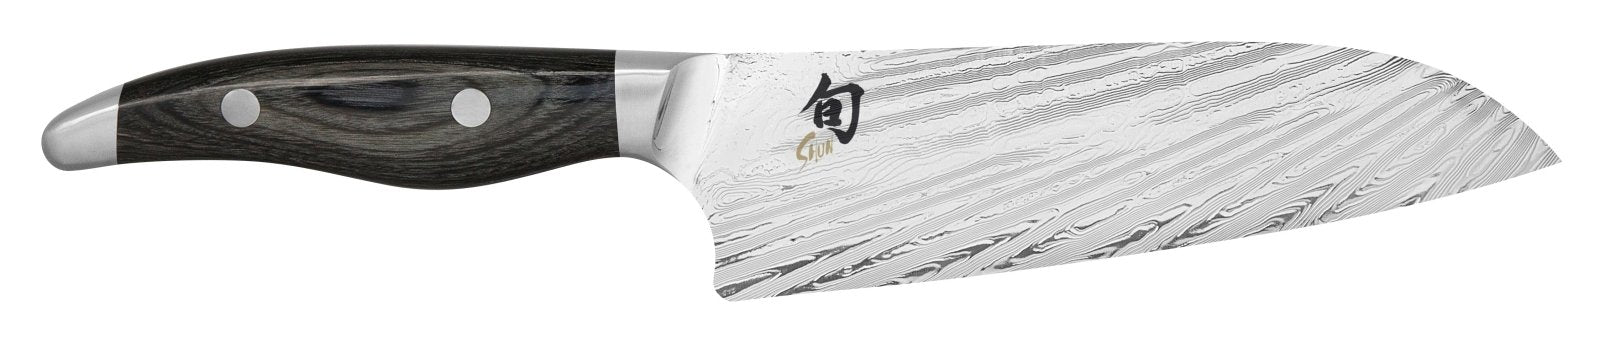 KAI Shun Nagare 18cm Santoku Knife - KAI-NDC-0702 - The Cotswold Knife Company